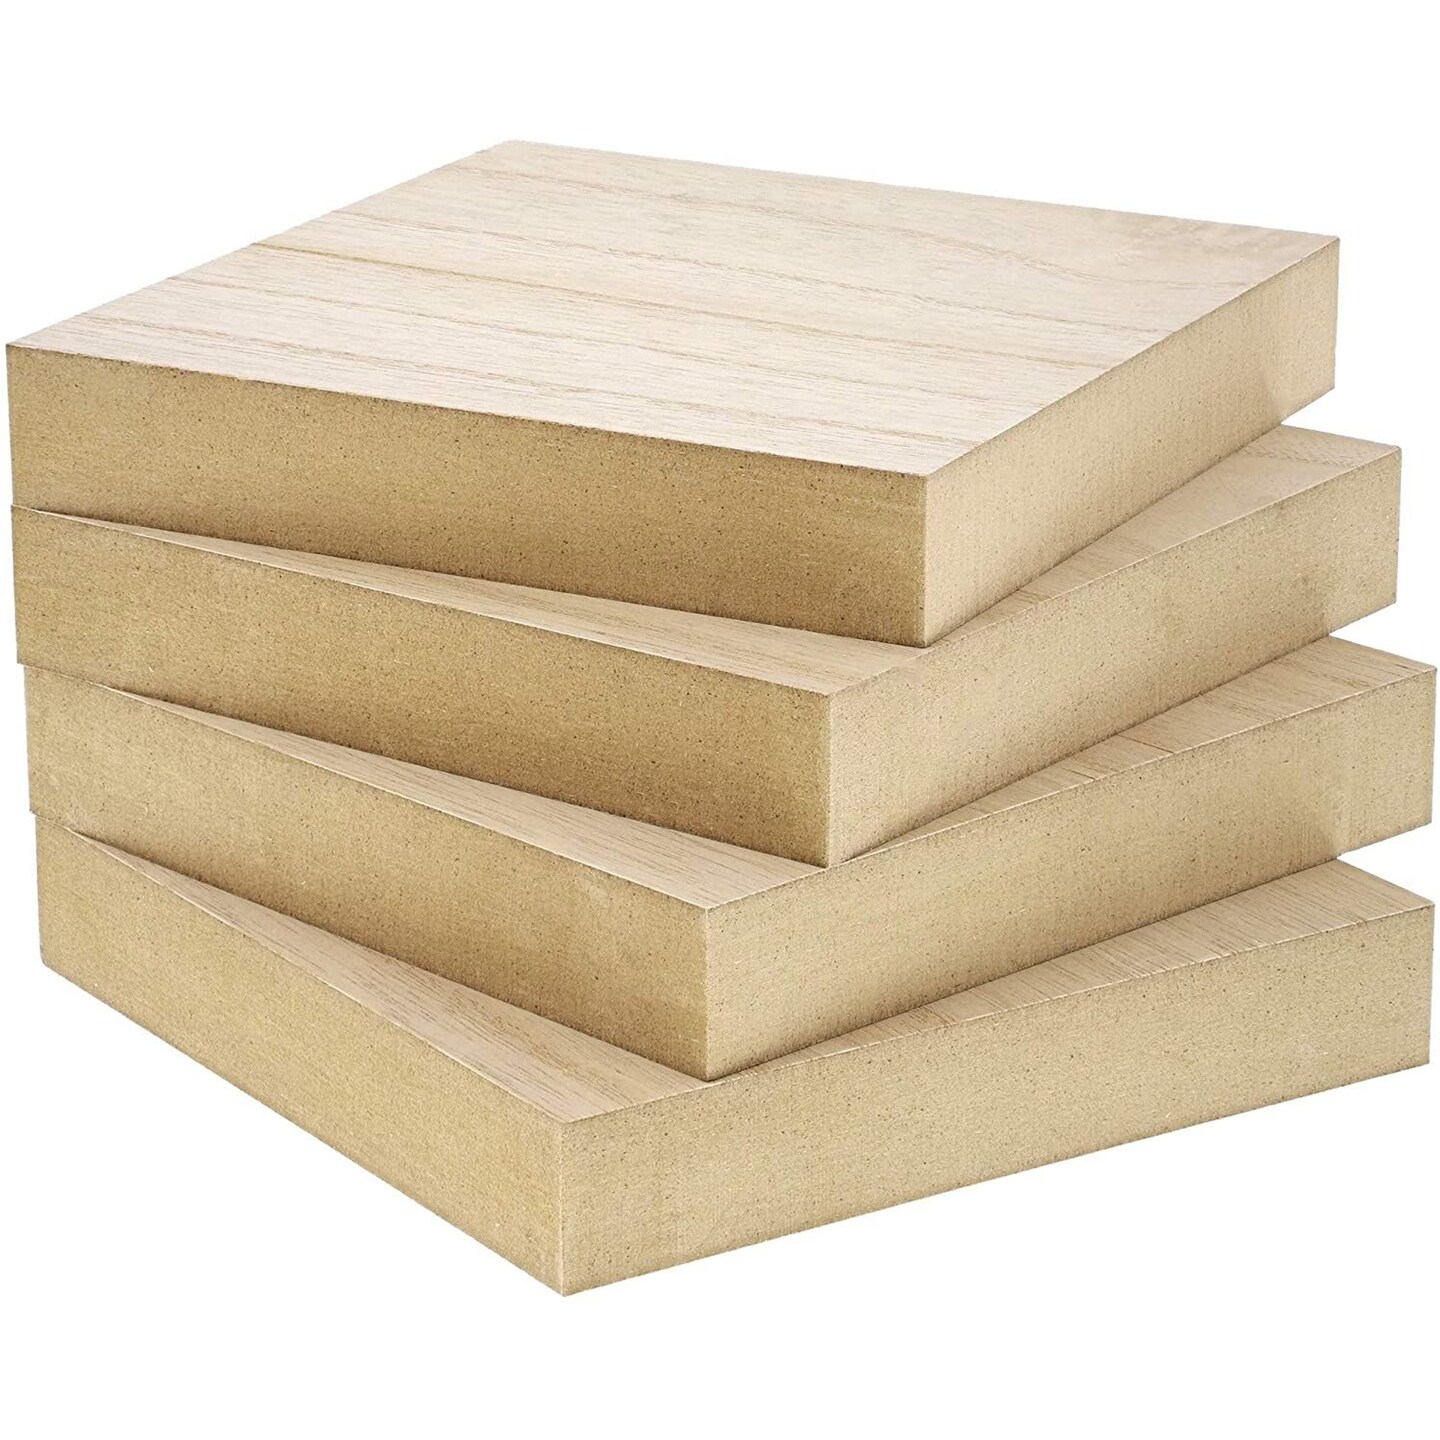 1 Square Wood Blocks by Make Market | Michaels